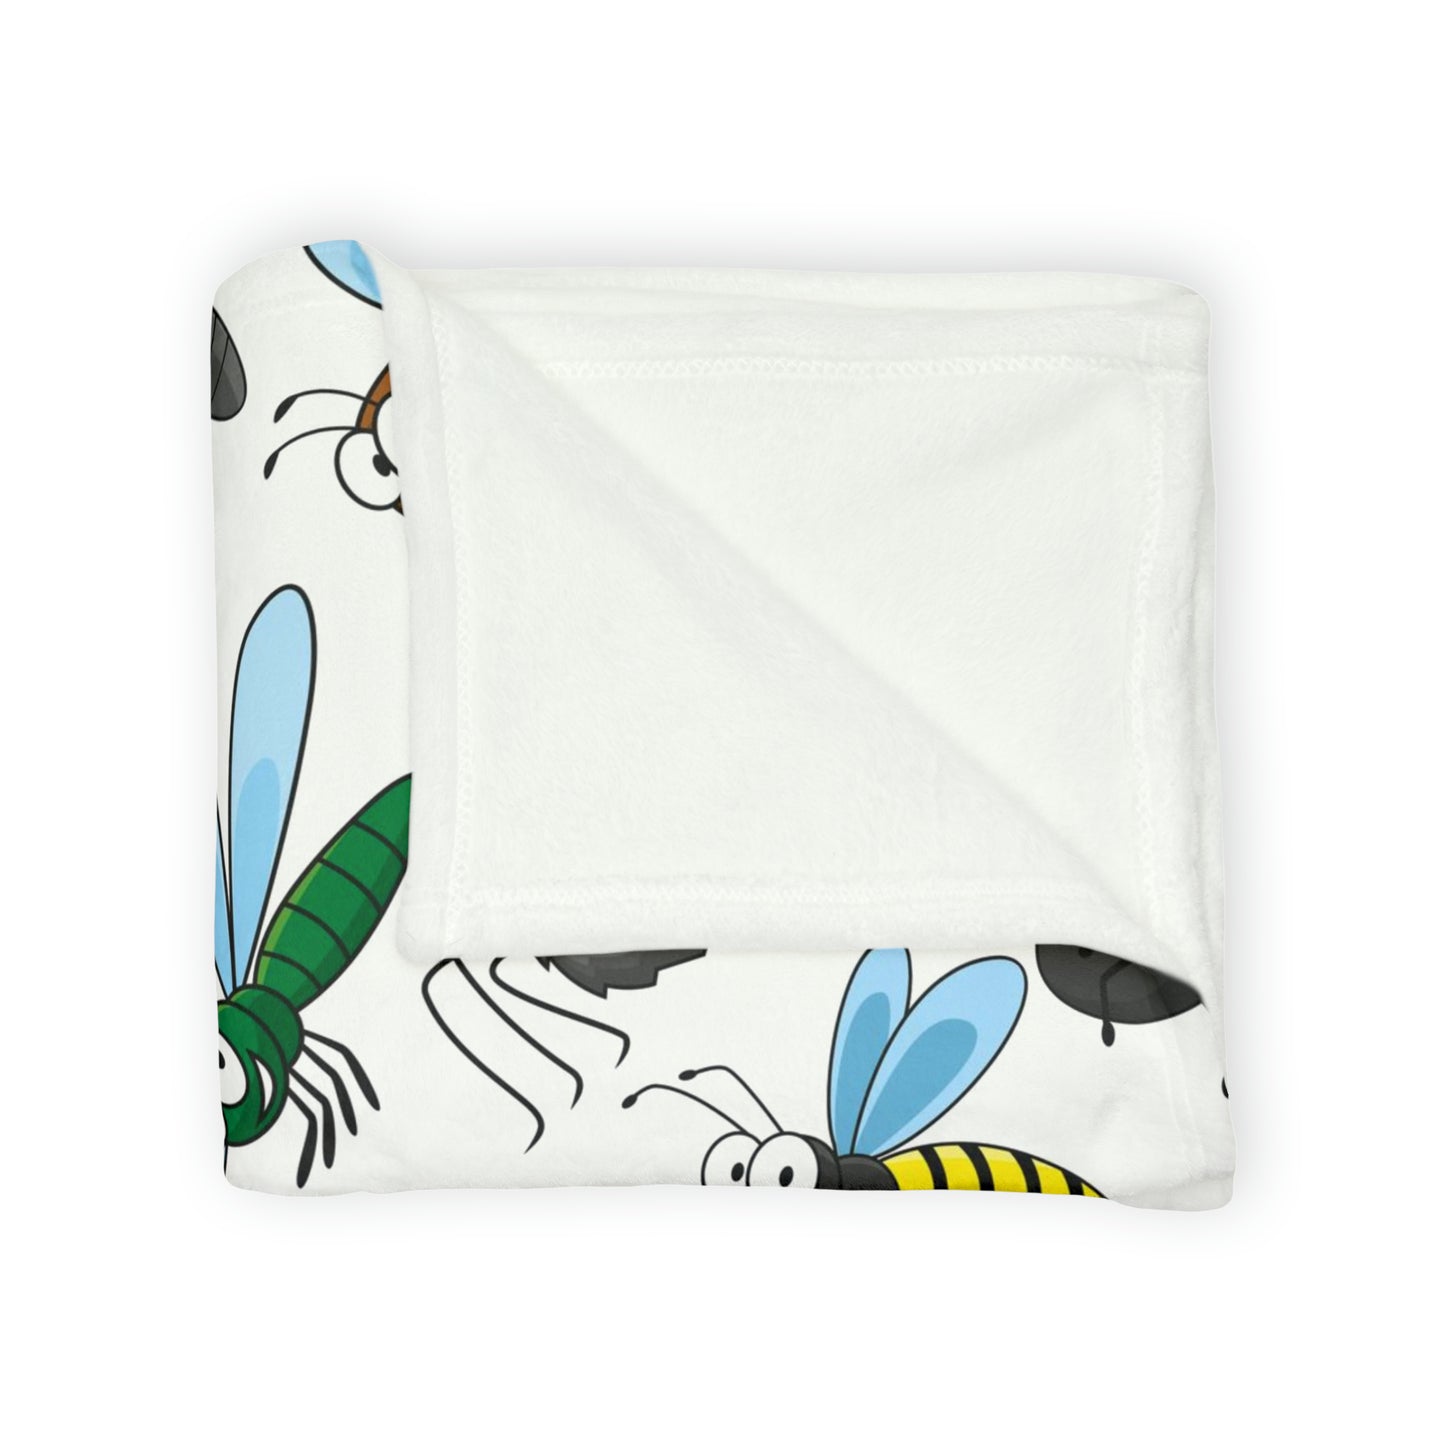 Little Creatures, Bugs - Soft Polyester Blanket Blanket